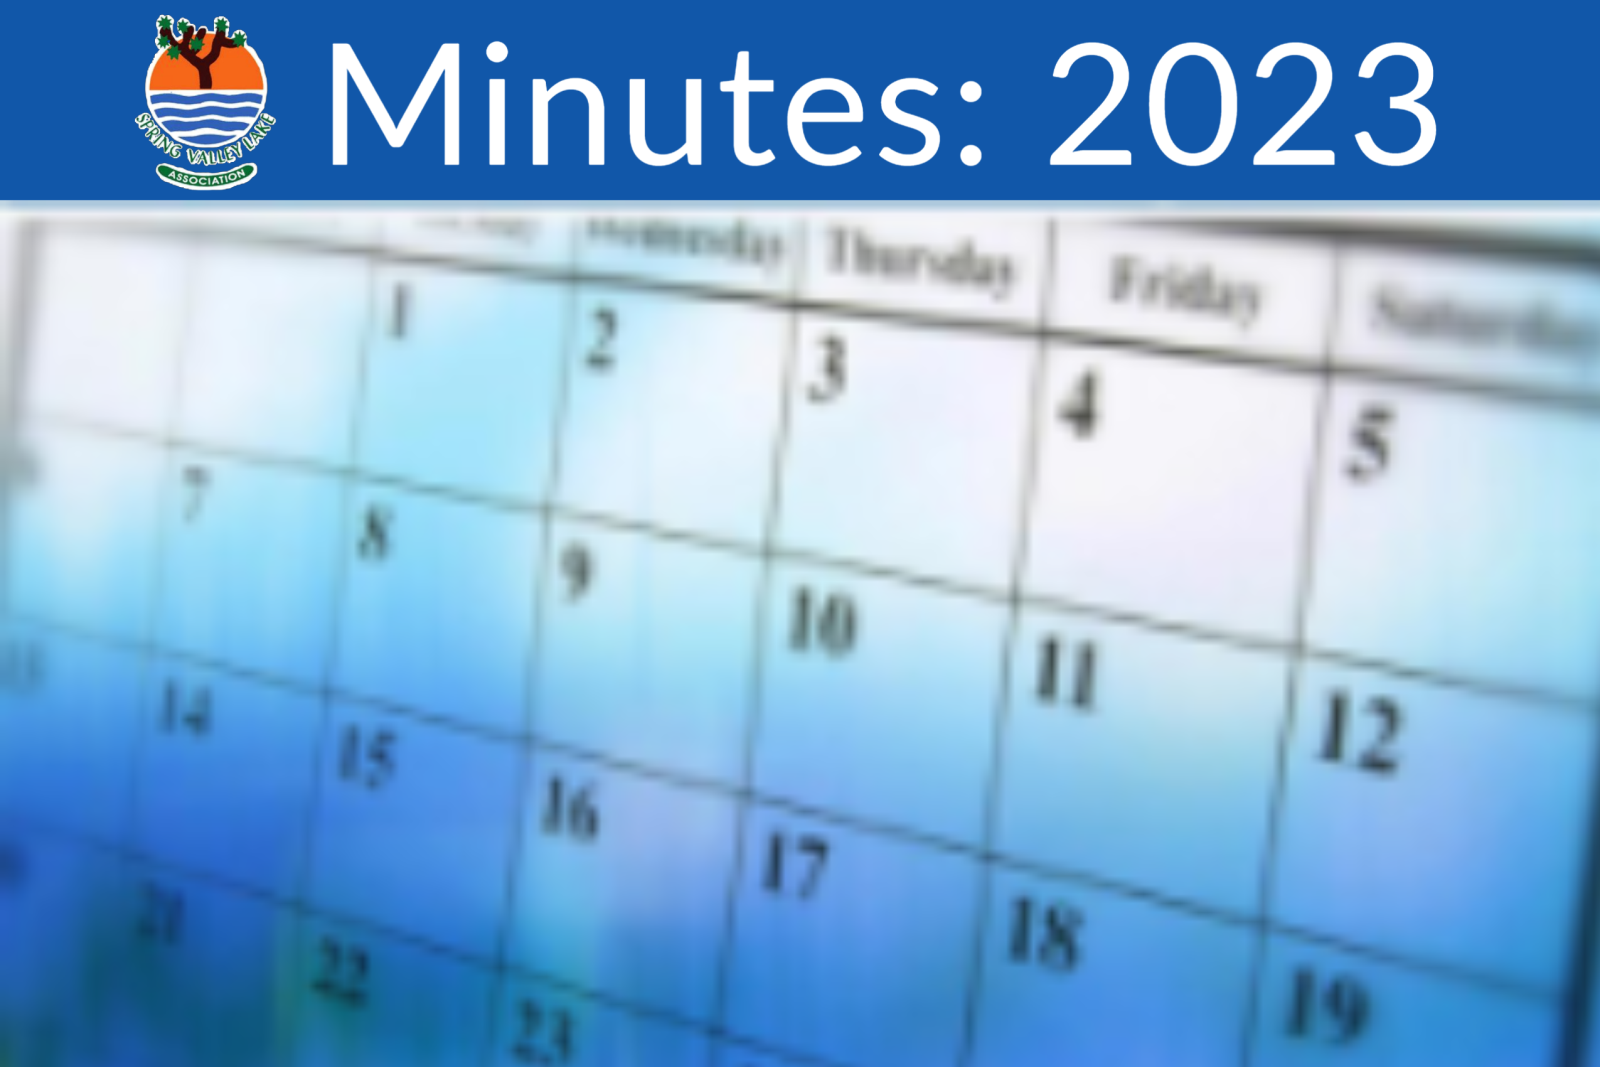 Minutes: 2023